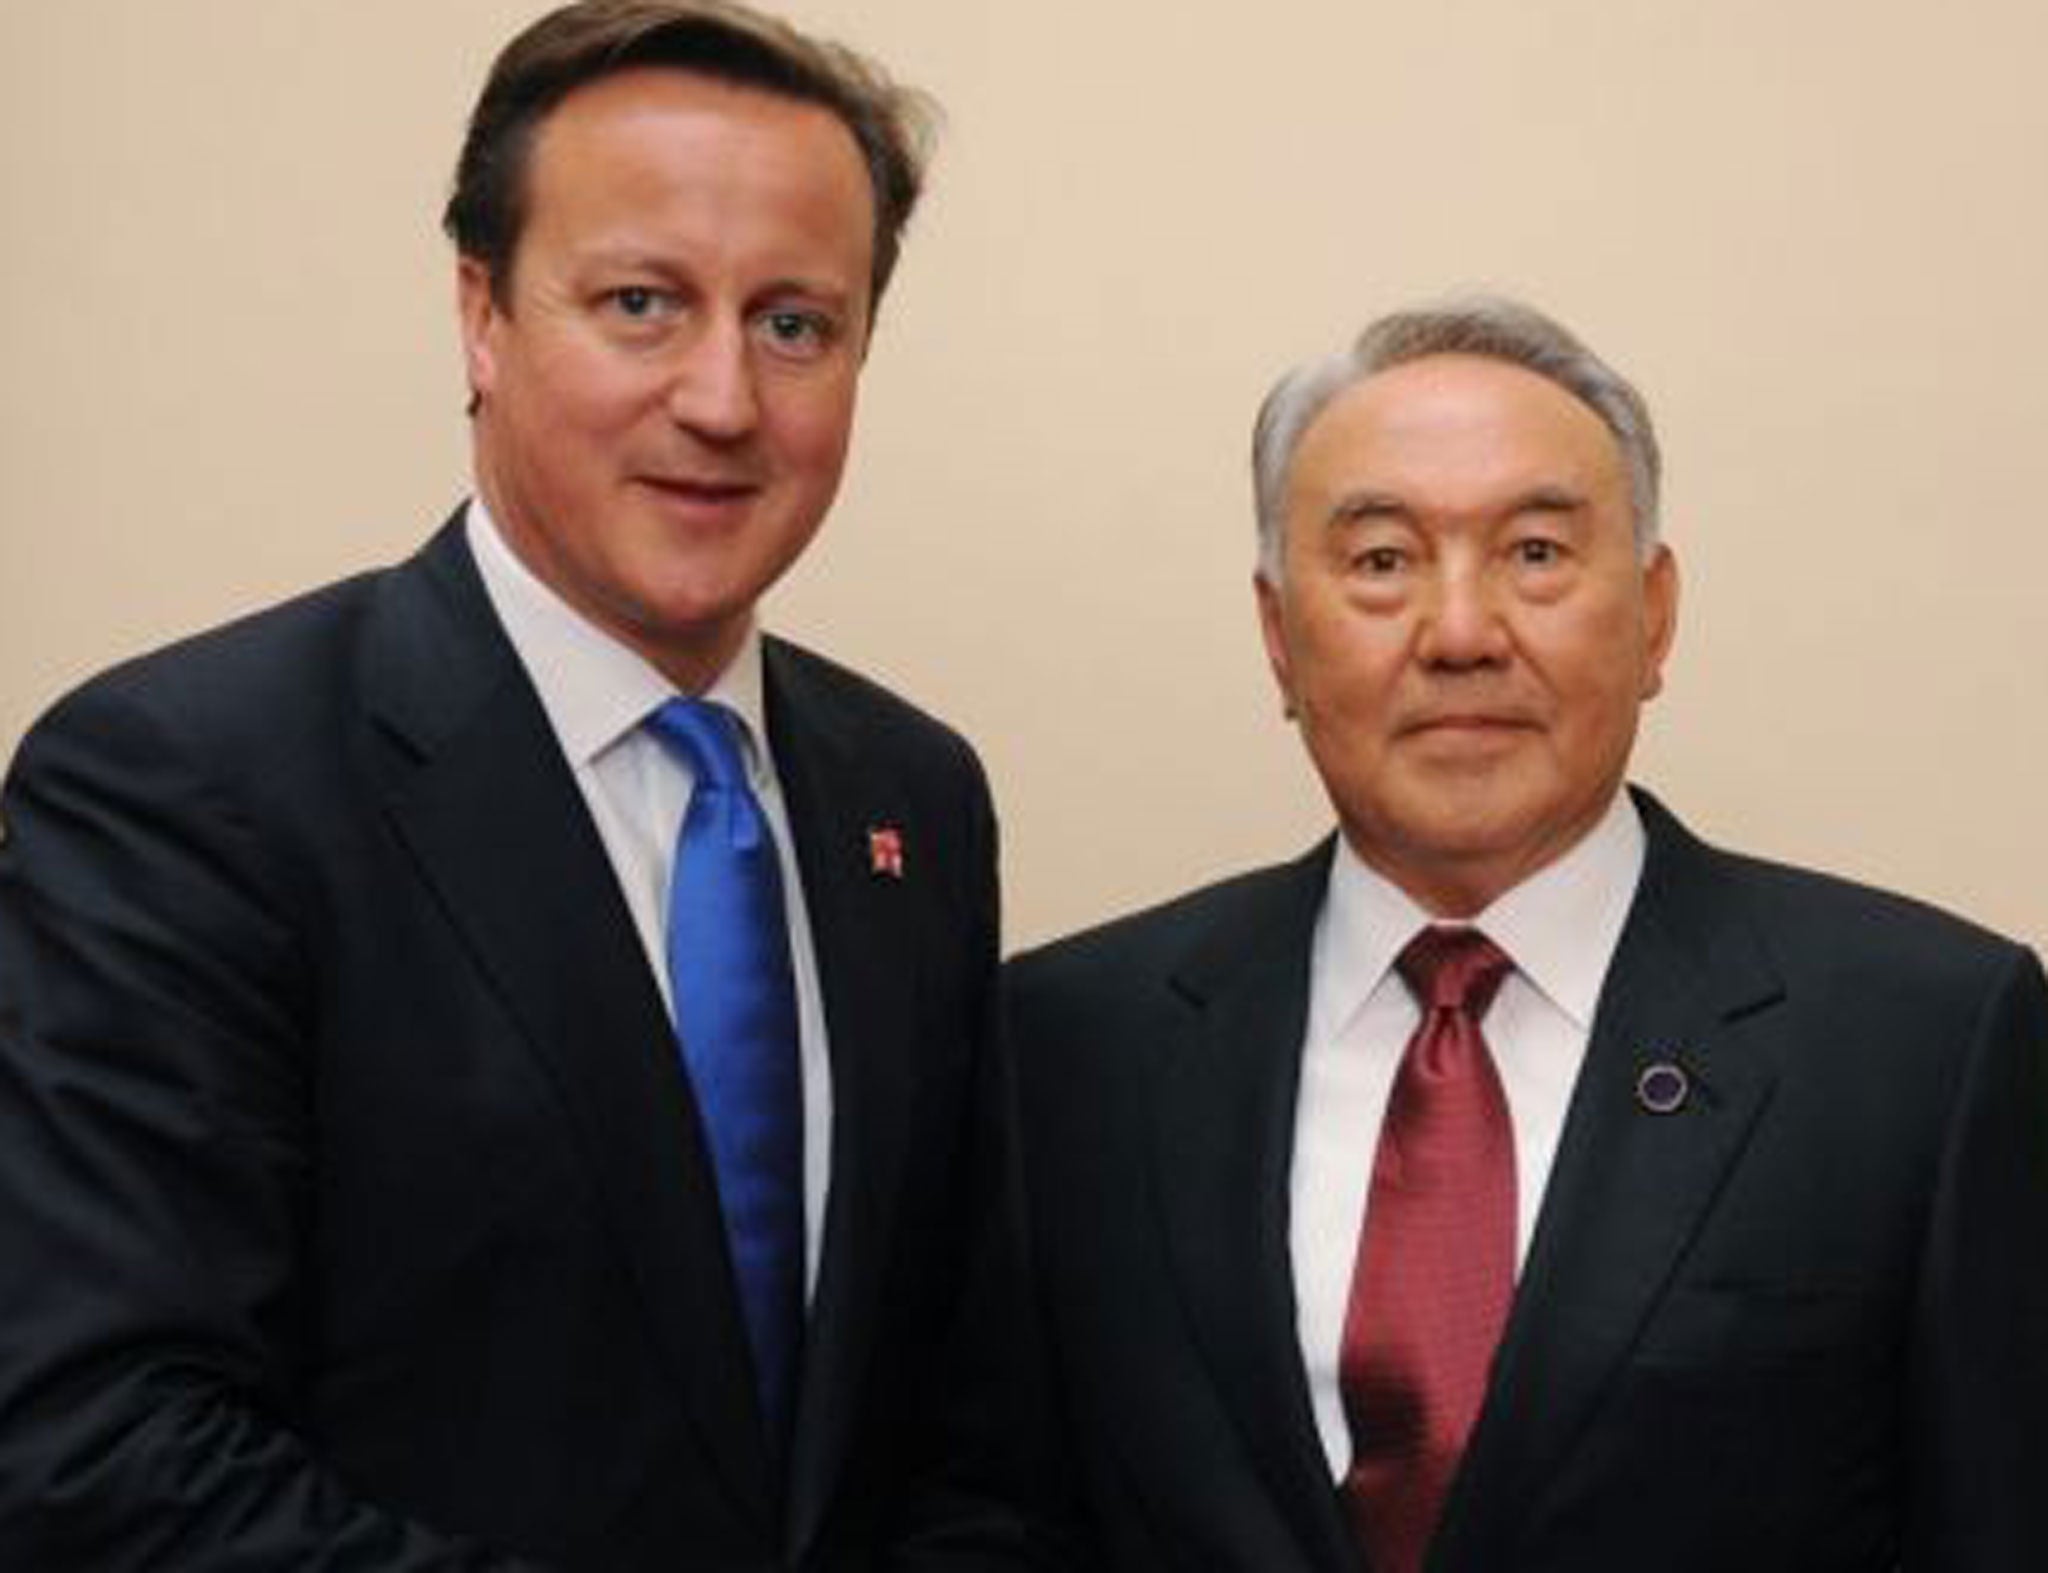 David Cameron shaking hands with the President of Kazakhstan Nursultan Nazarbayev